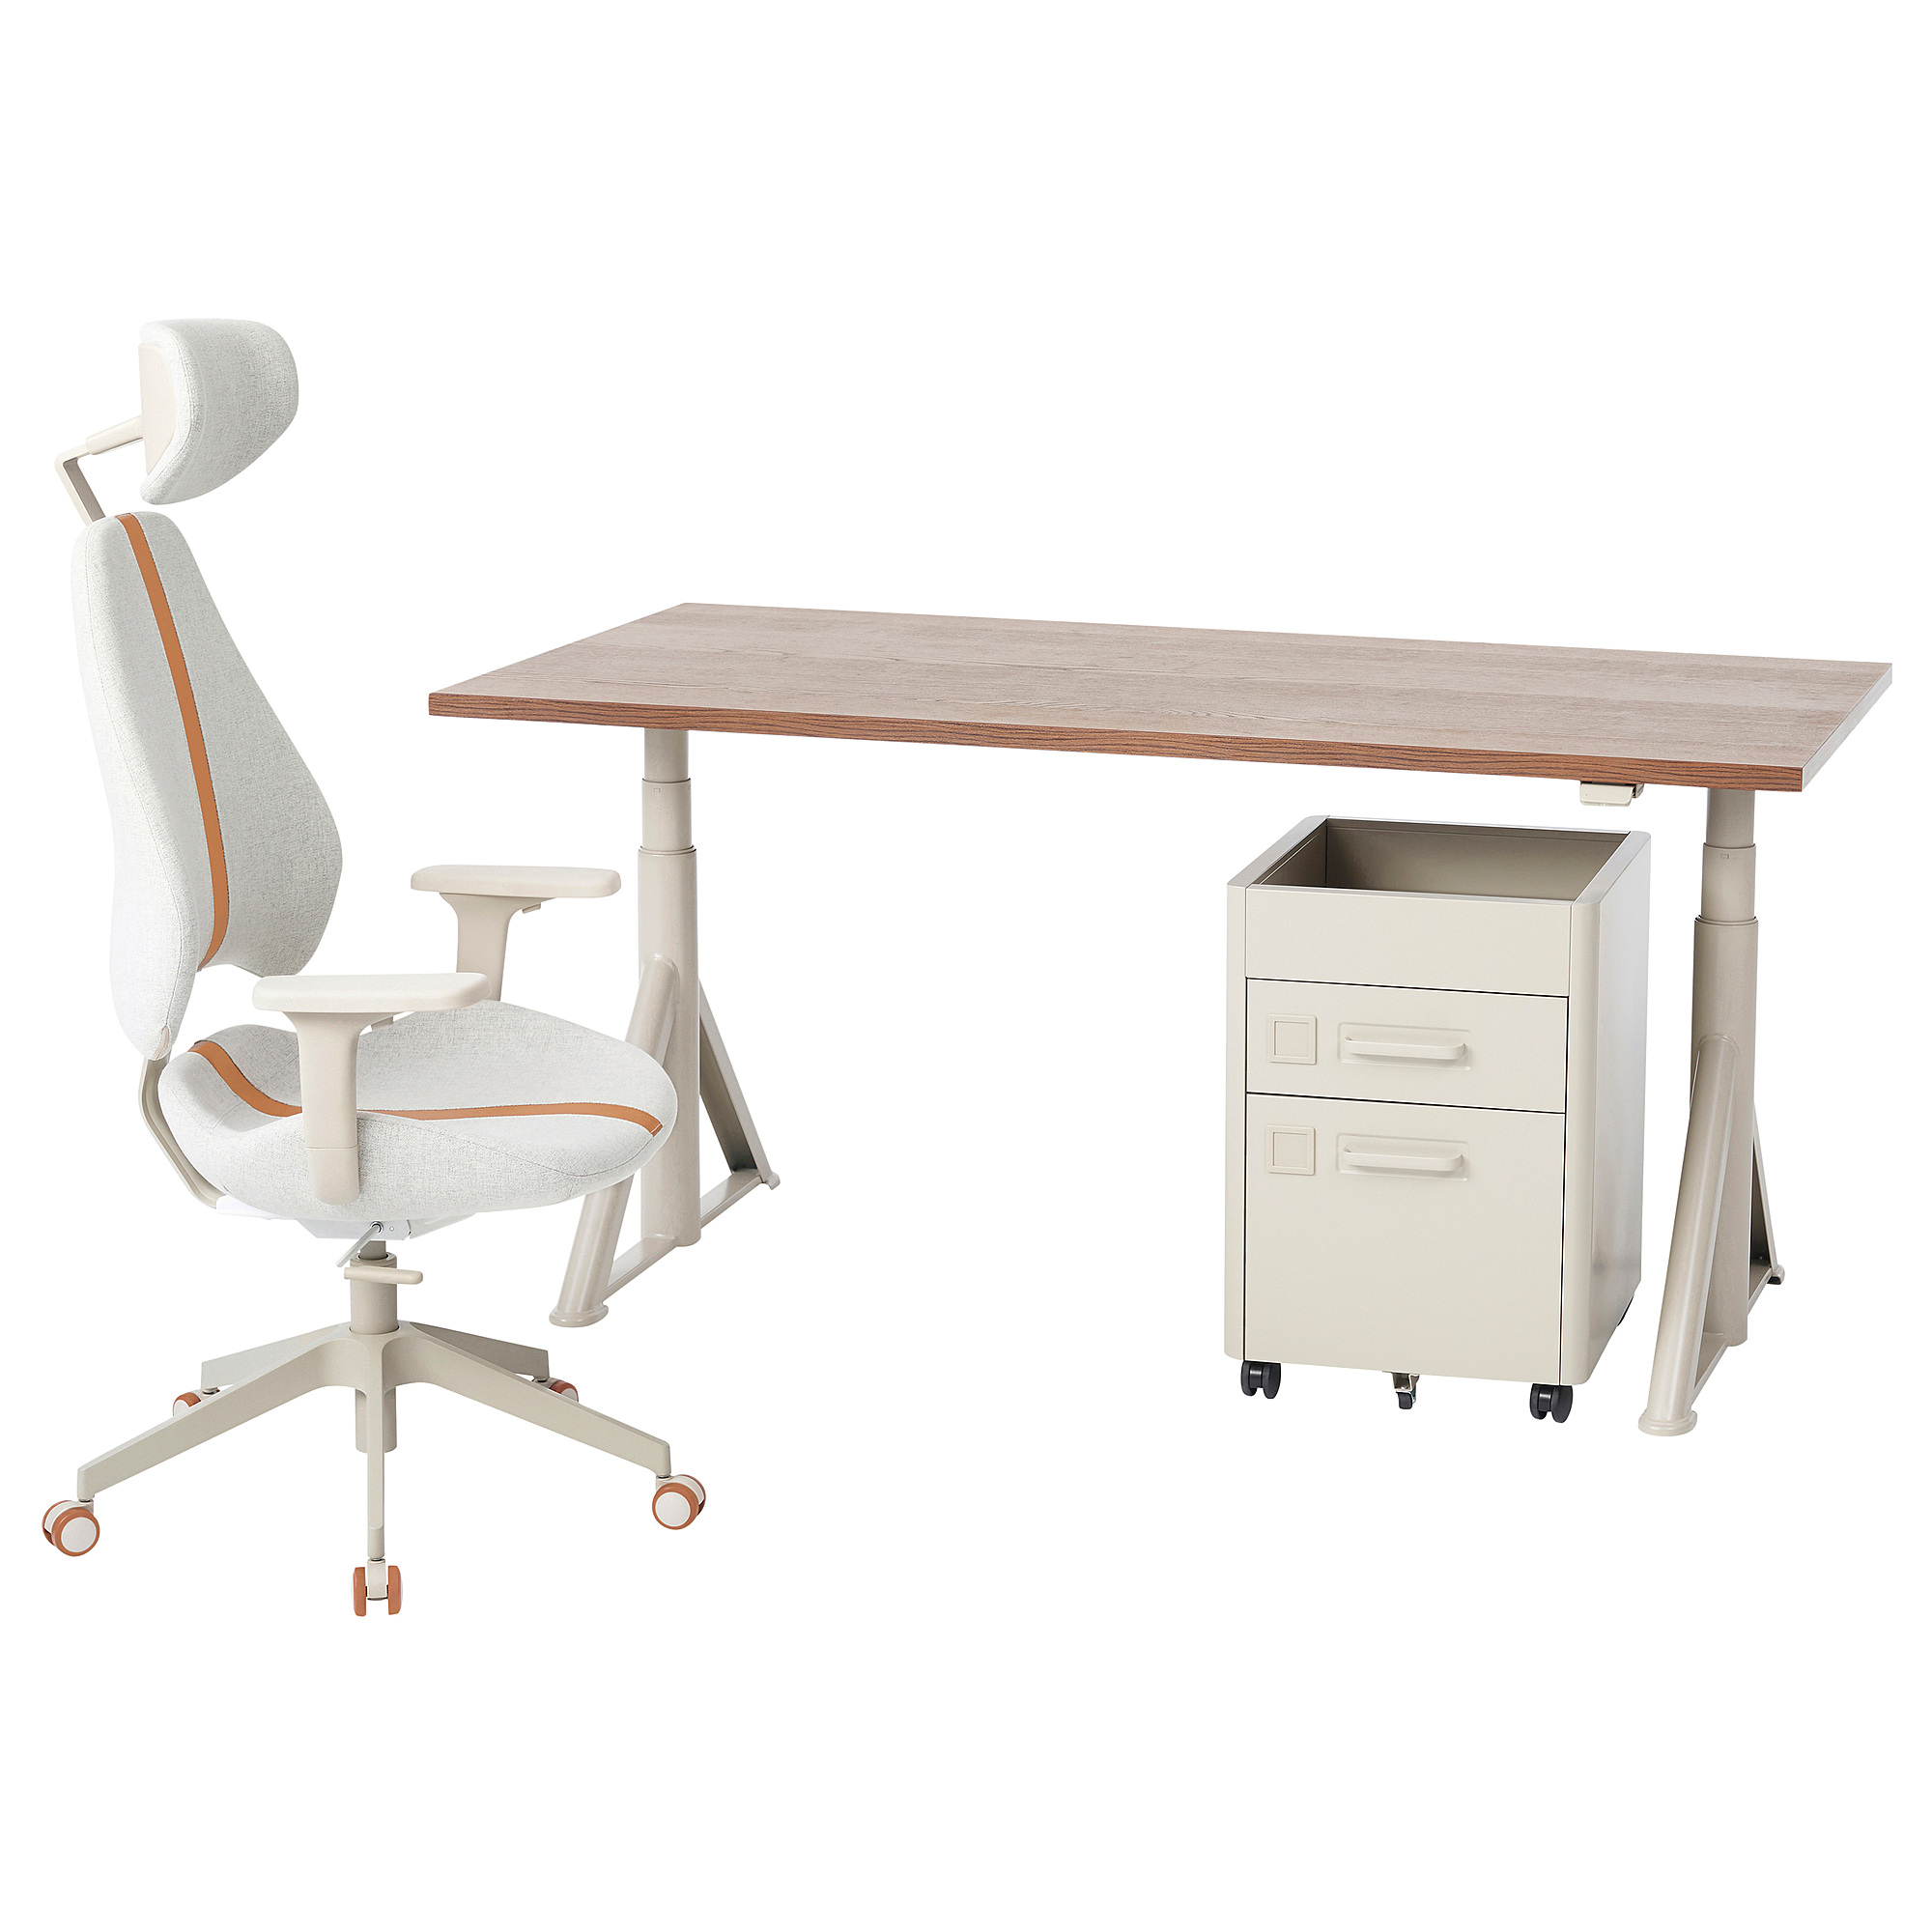 IDÅSEN/GRUPPSPEL desk, chair and drawer unit